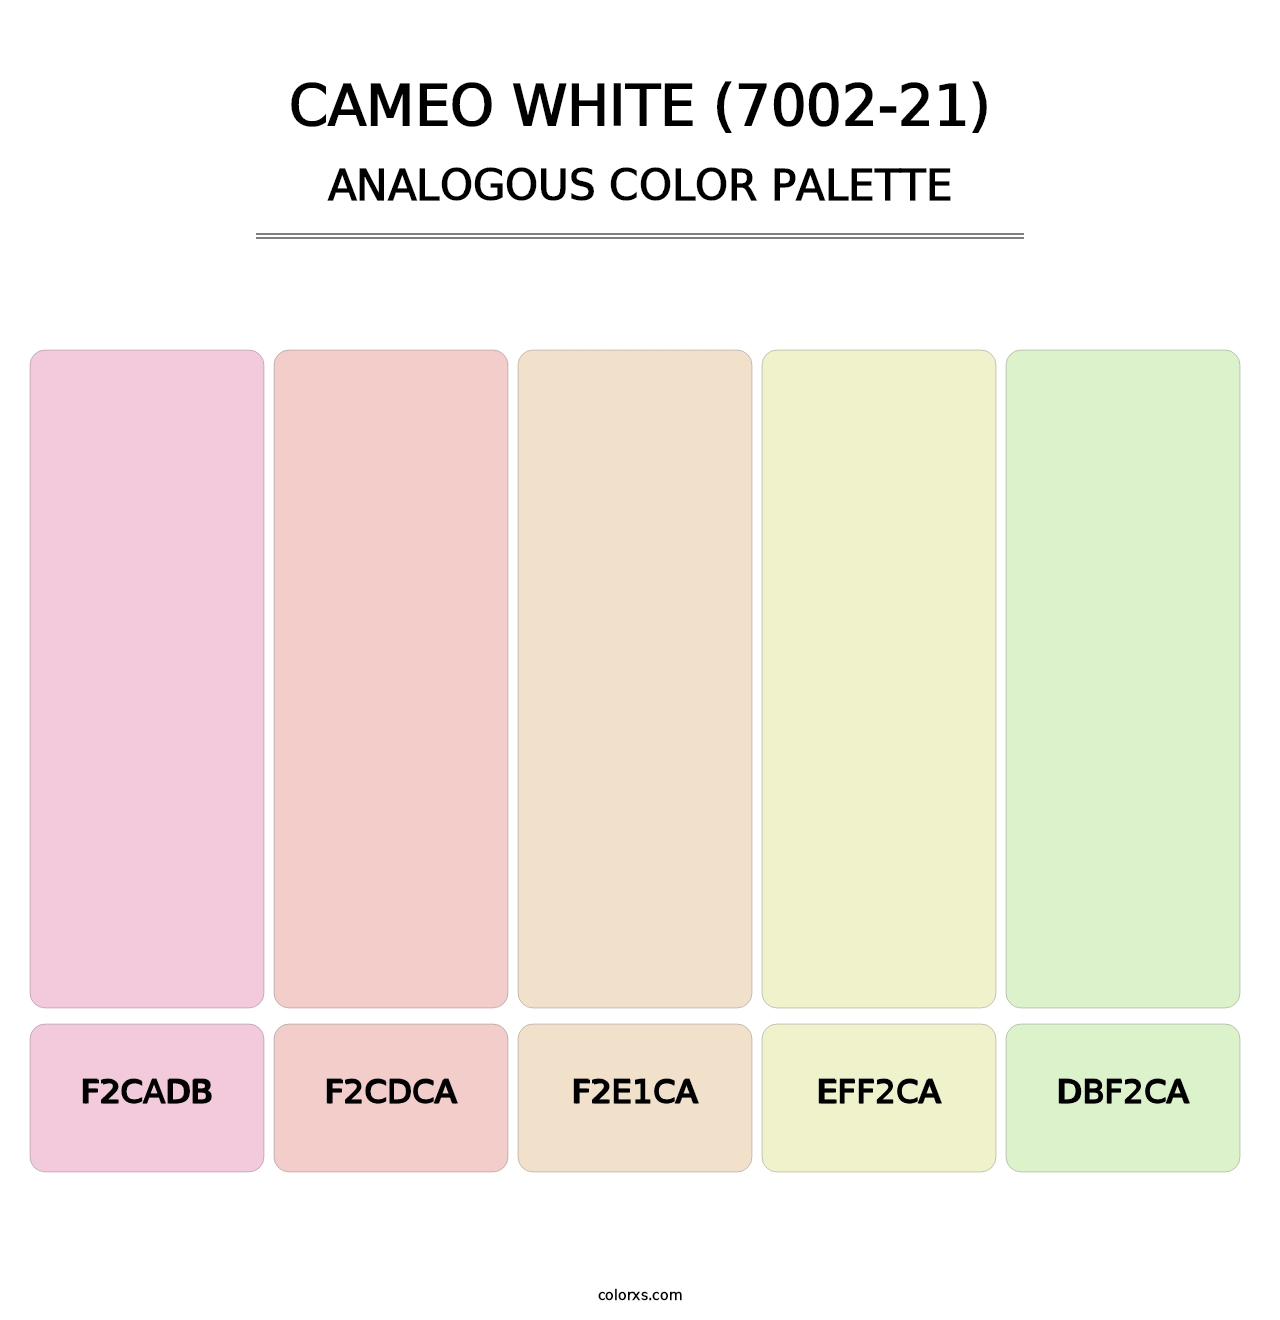 Cameo White (7002-21) - Analogous Color Palette